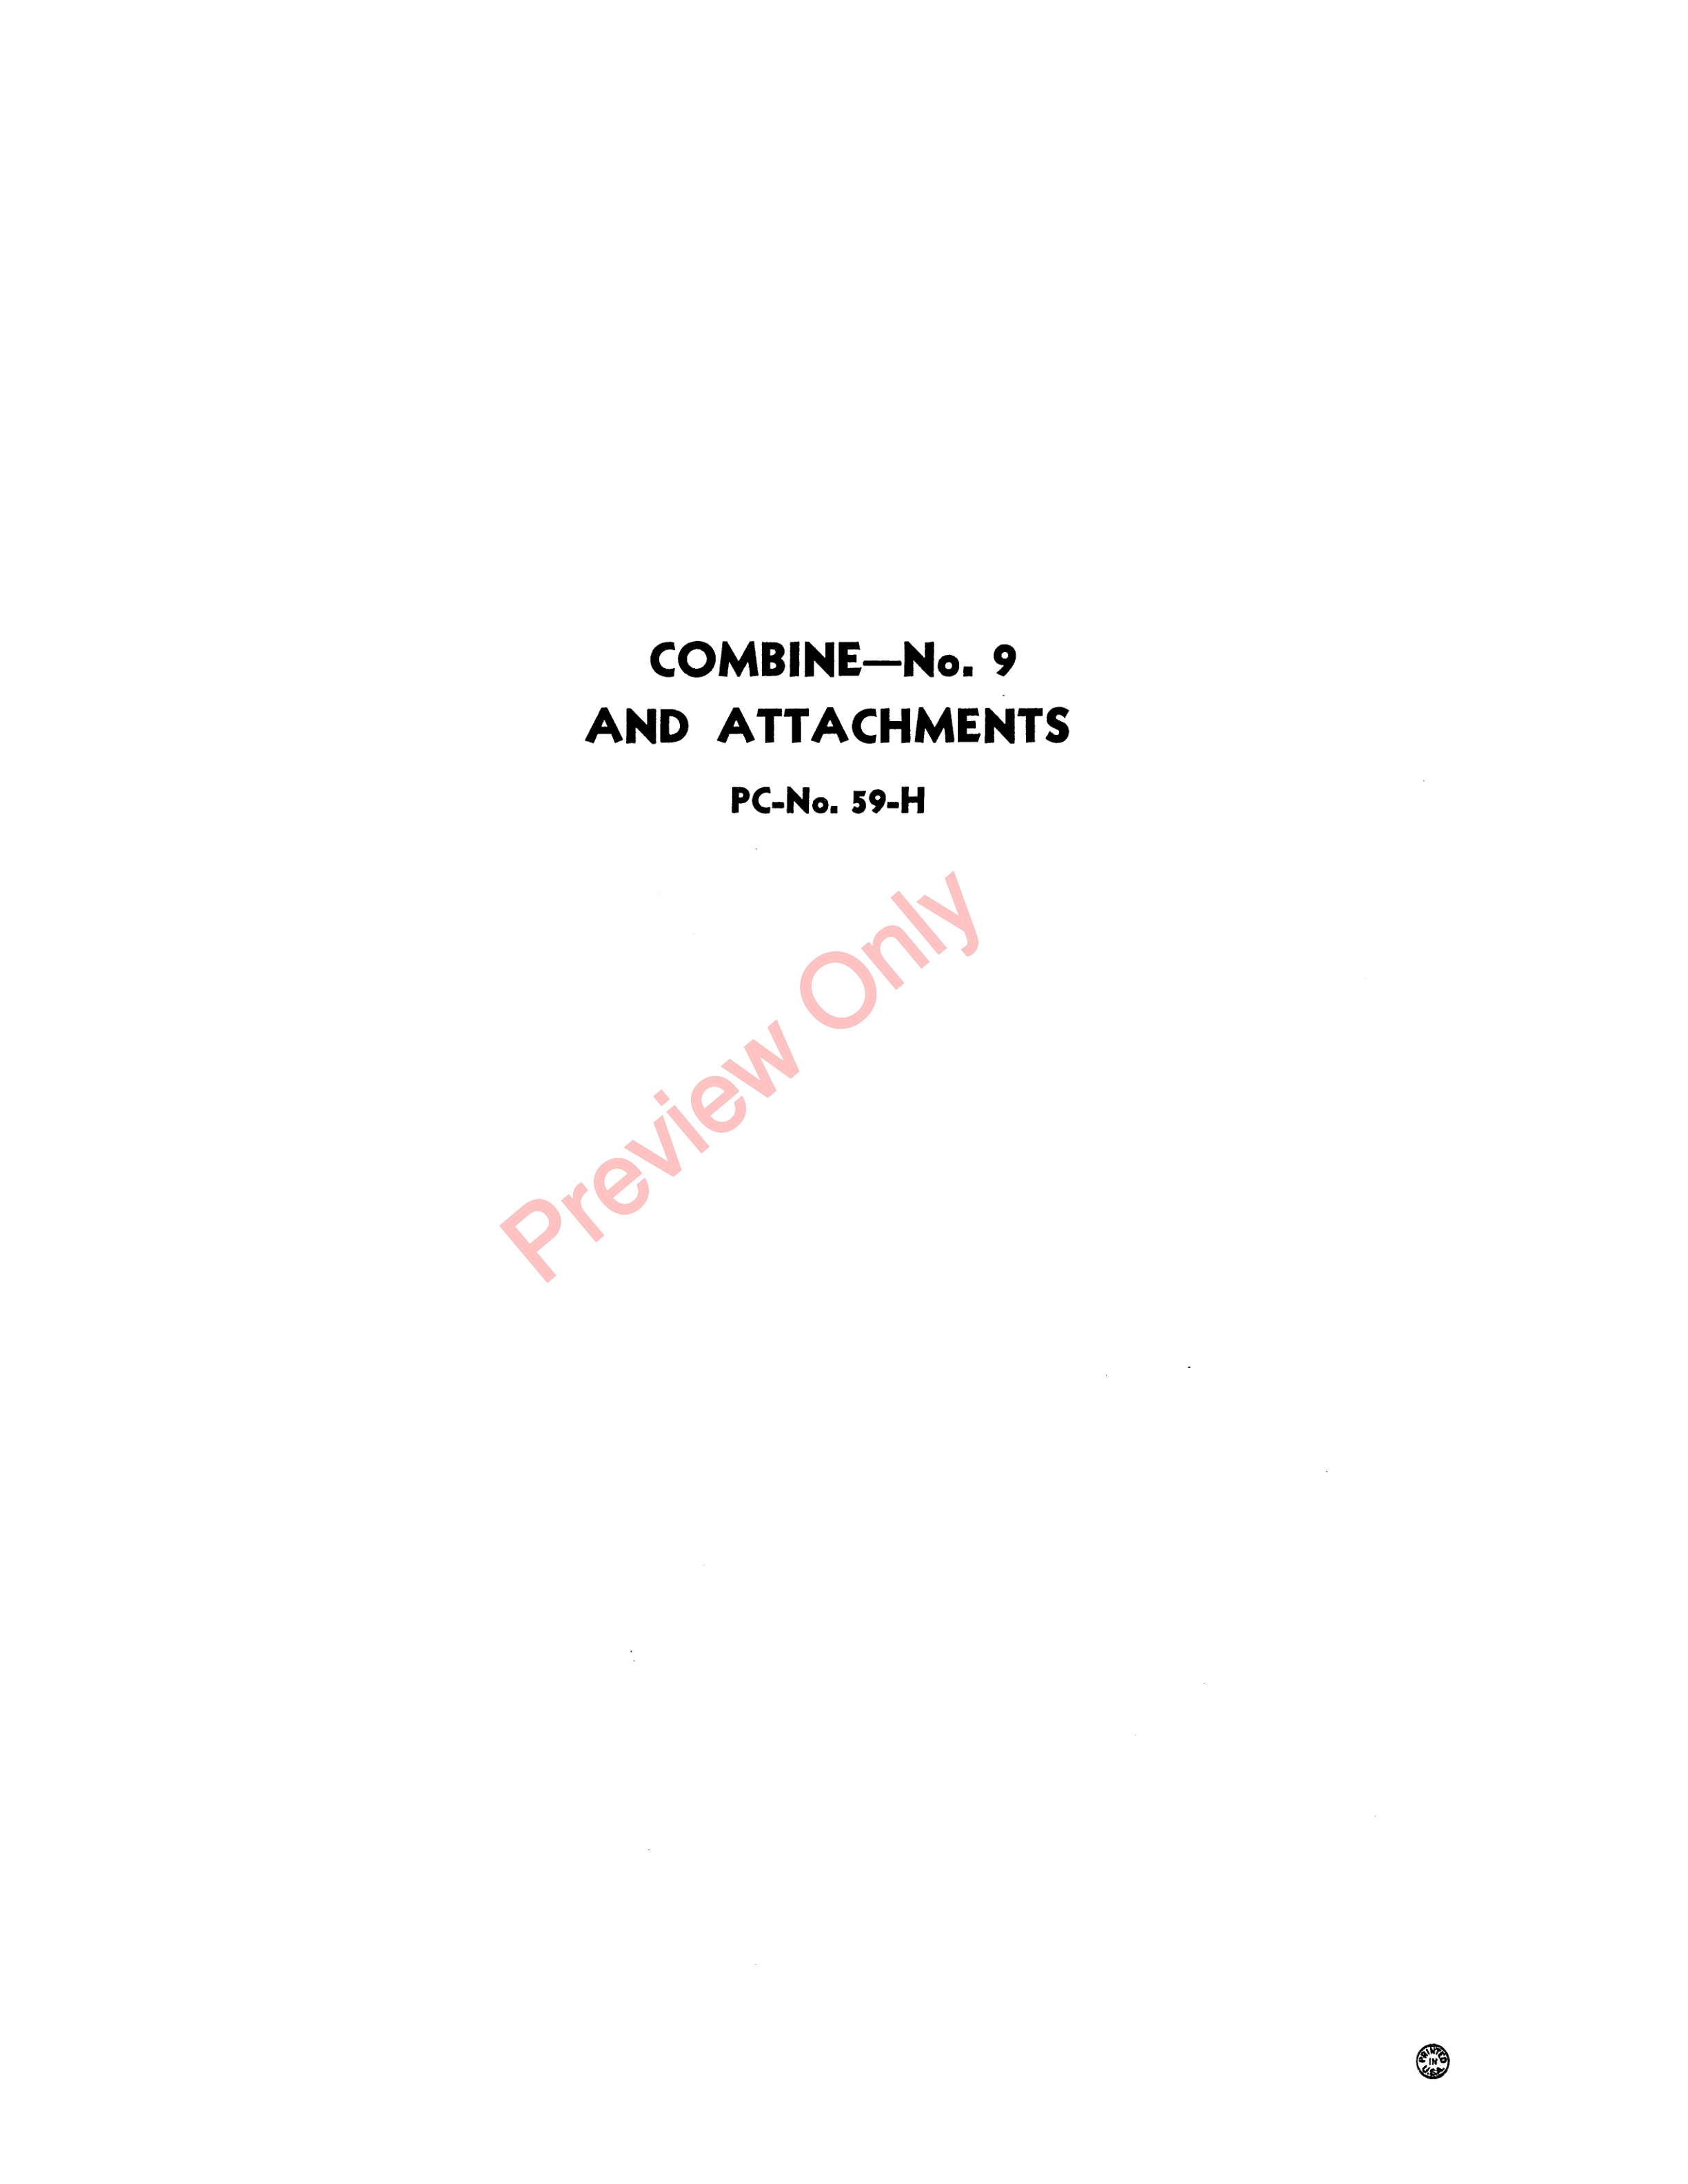 John Deere 9 Combine Parts Catalog CAT59H 15JUN46 4